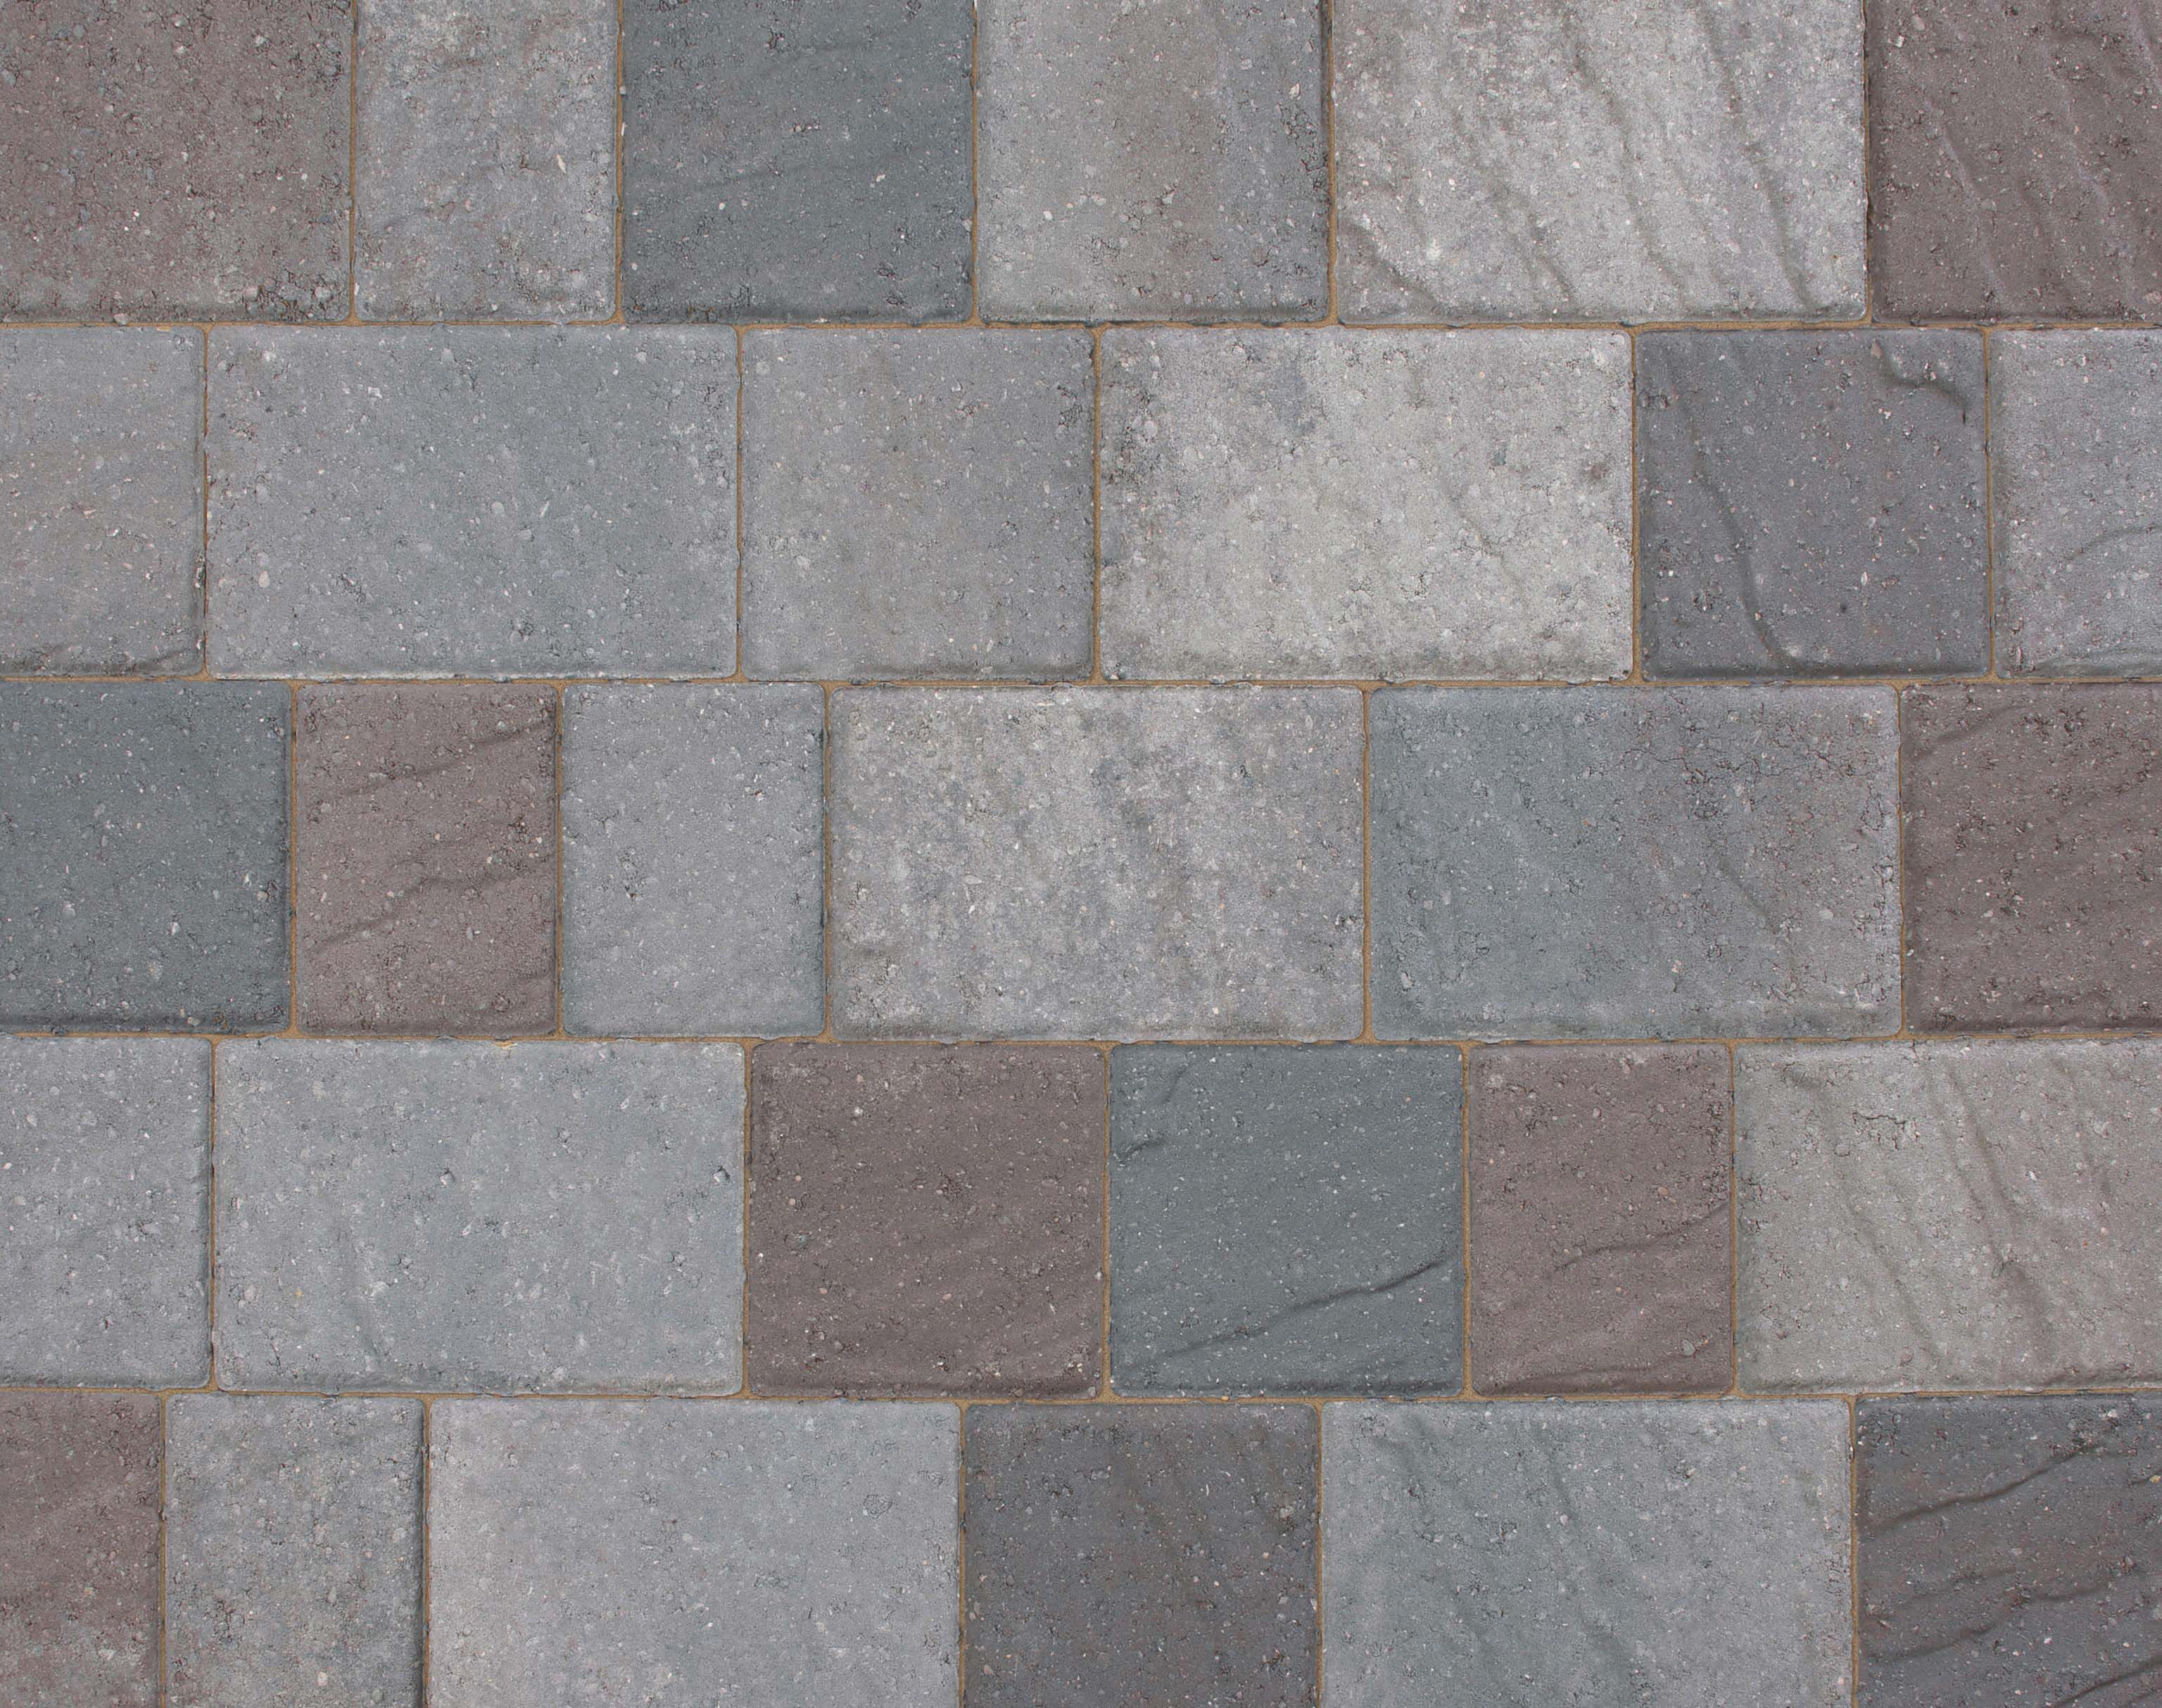 Marshalls Drivesett Natrale Textured Slate Driveway Block Paving - Sample